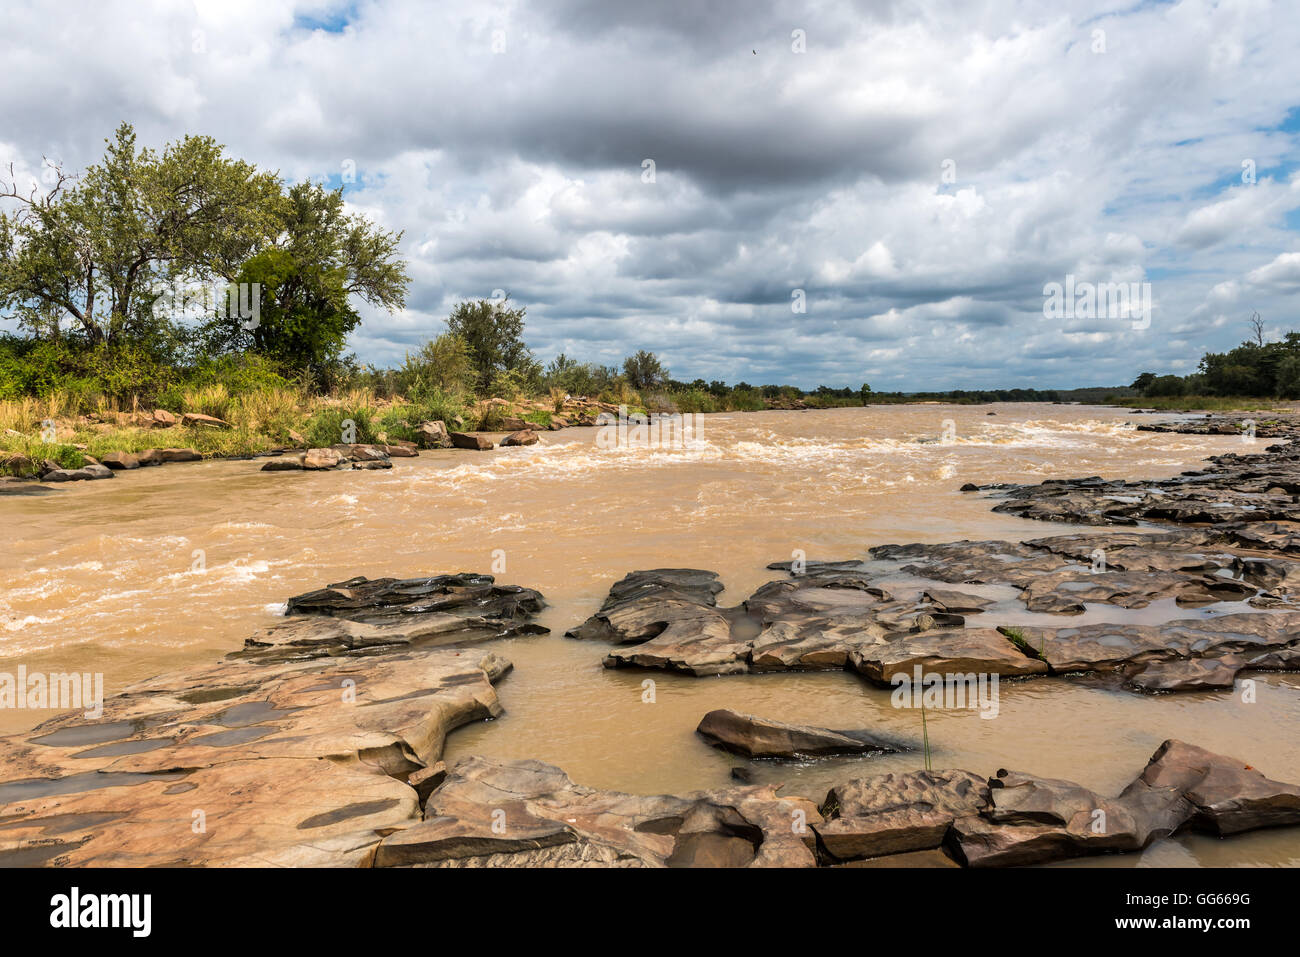 The Great Ruaha River in Tanzania Stock Photo